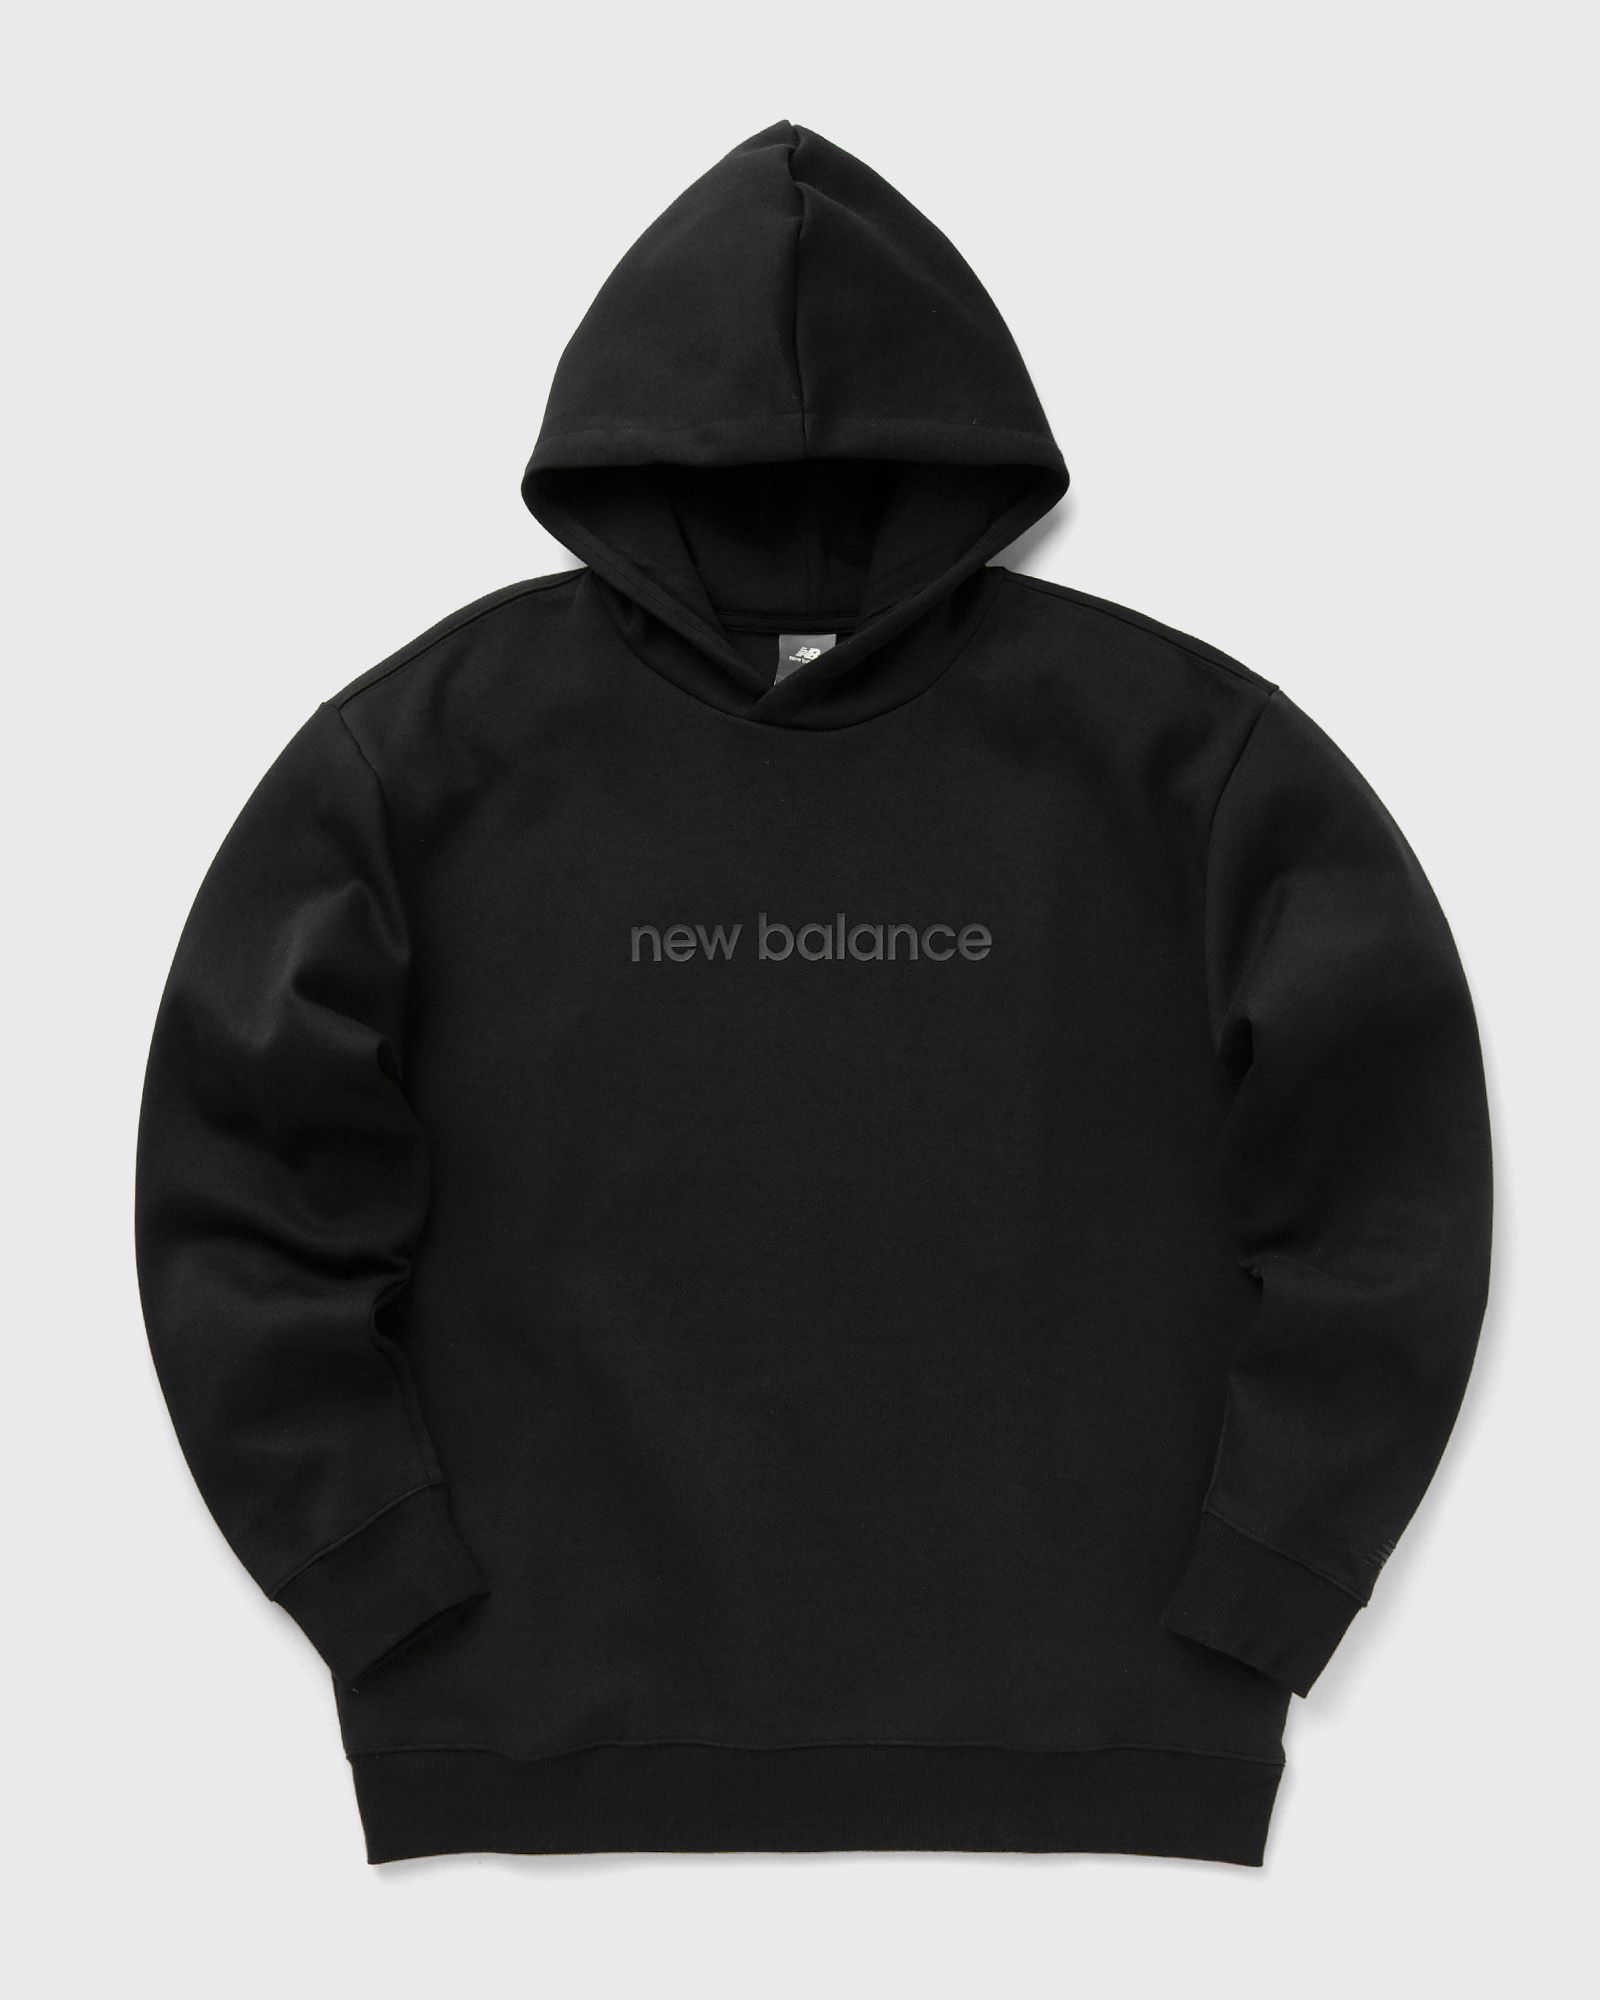 New Balance - shifted graphic hoodie men hoodies black in größe:s